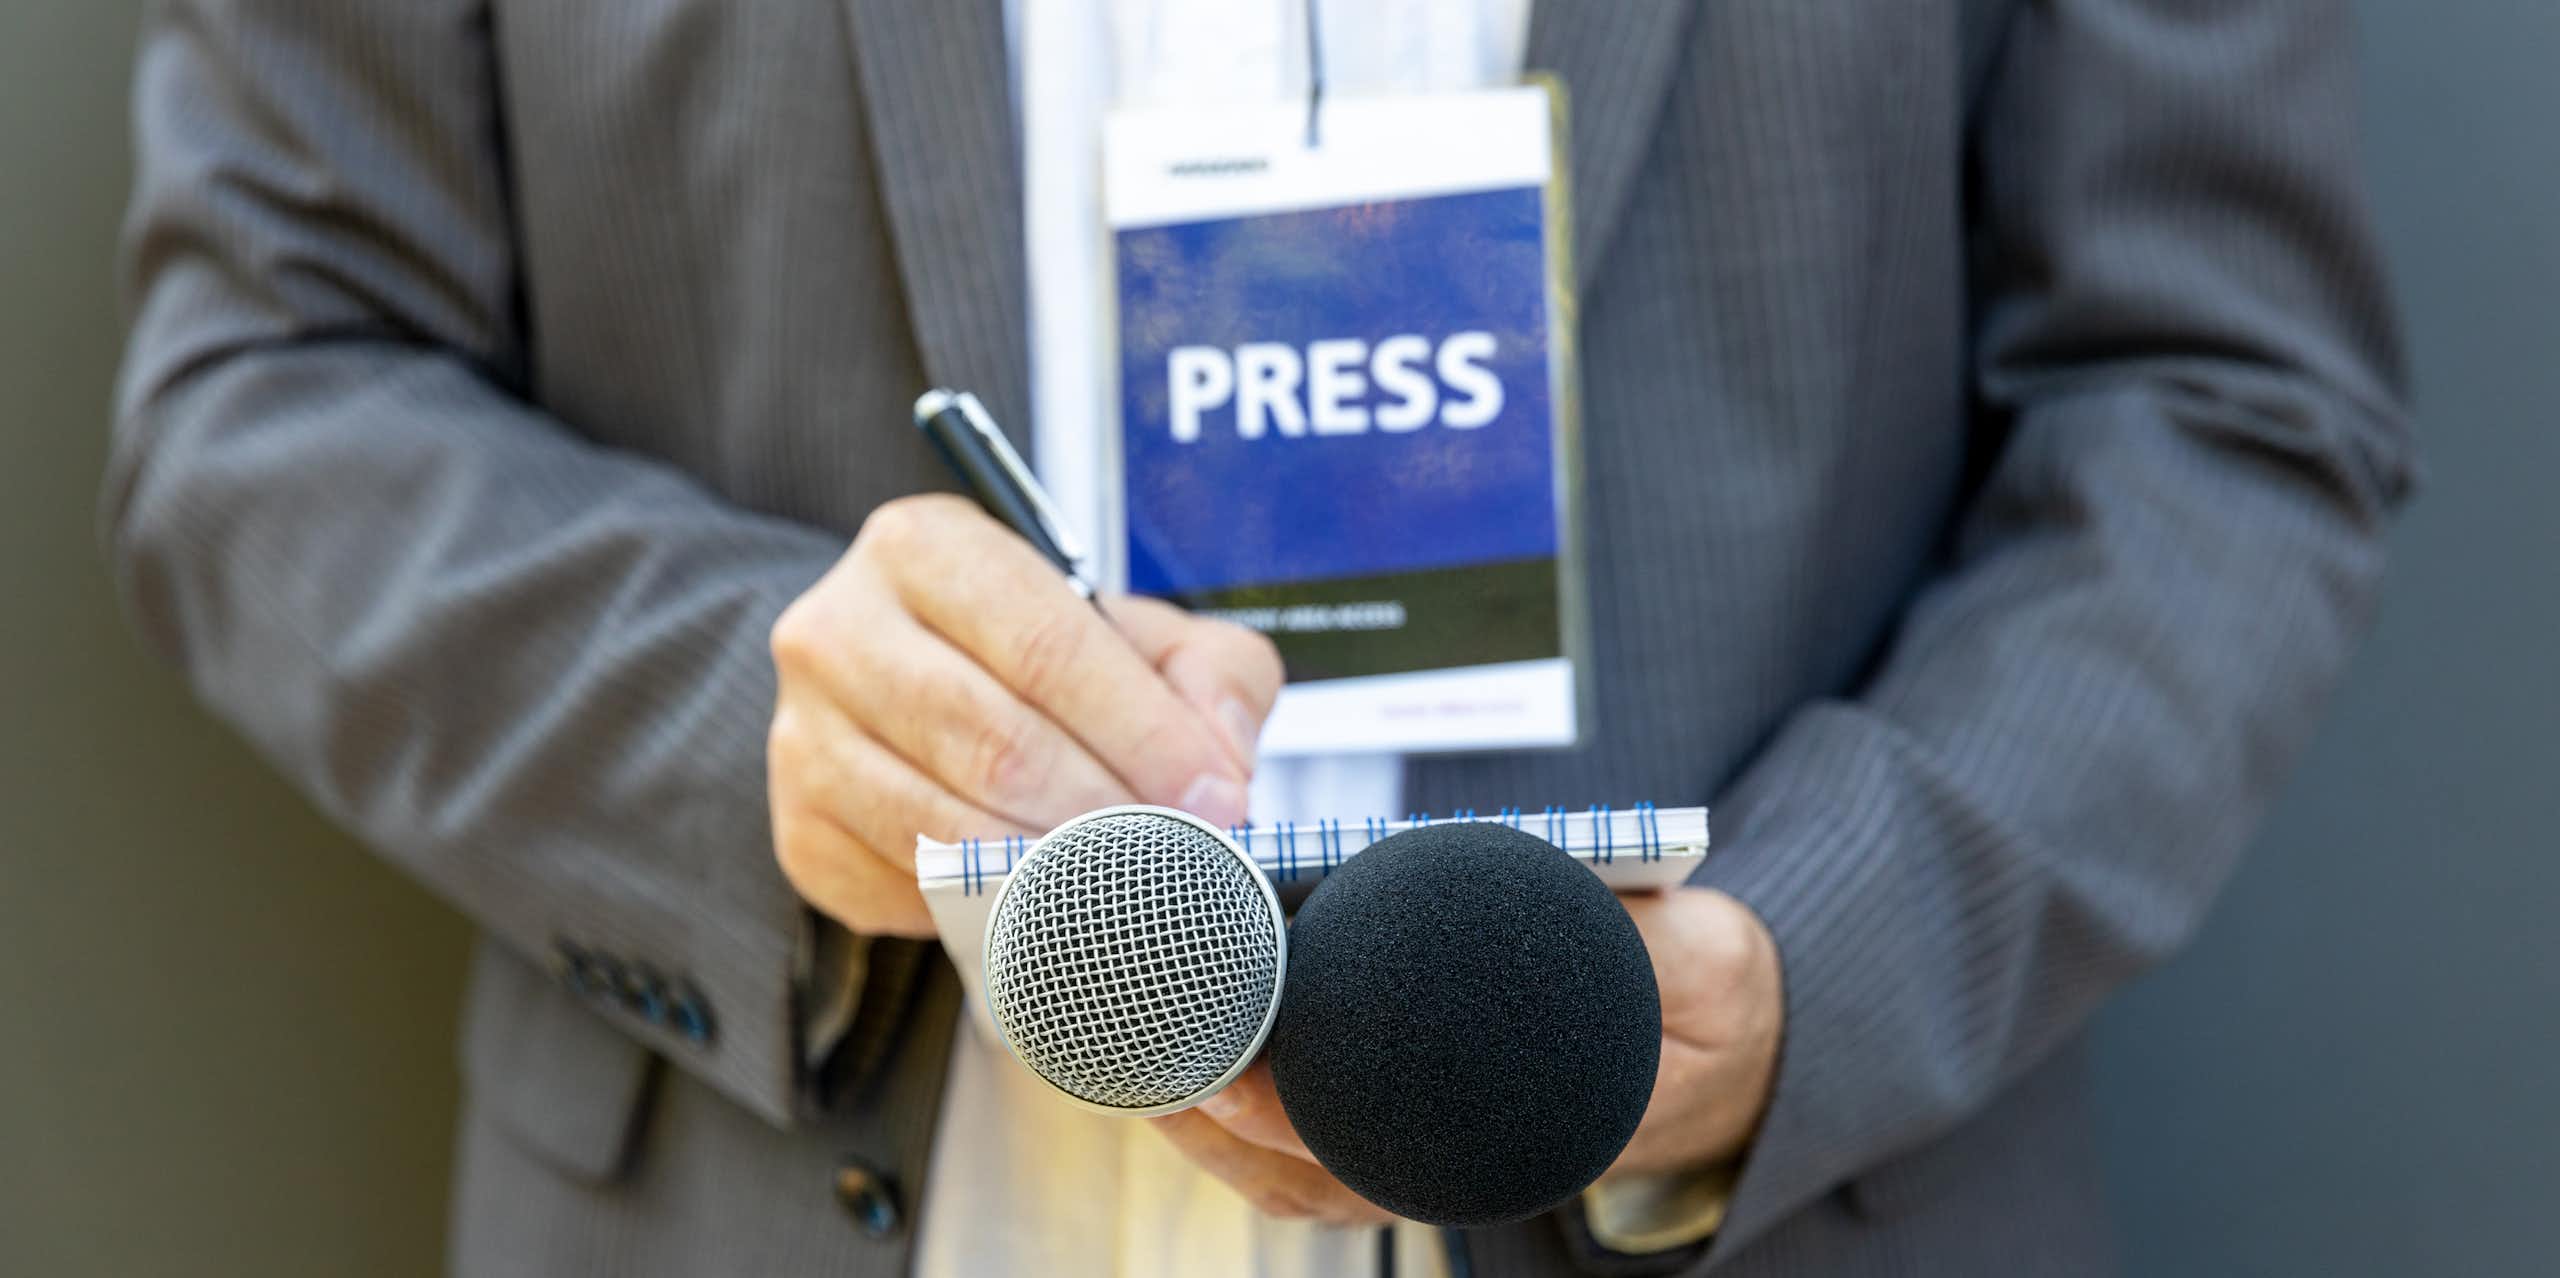 Beban kerja besar, finansial rentan: riset temukan 3 dilema profesi jurnalis